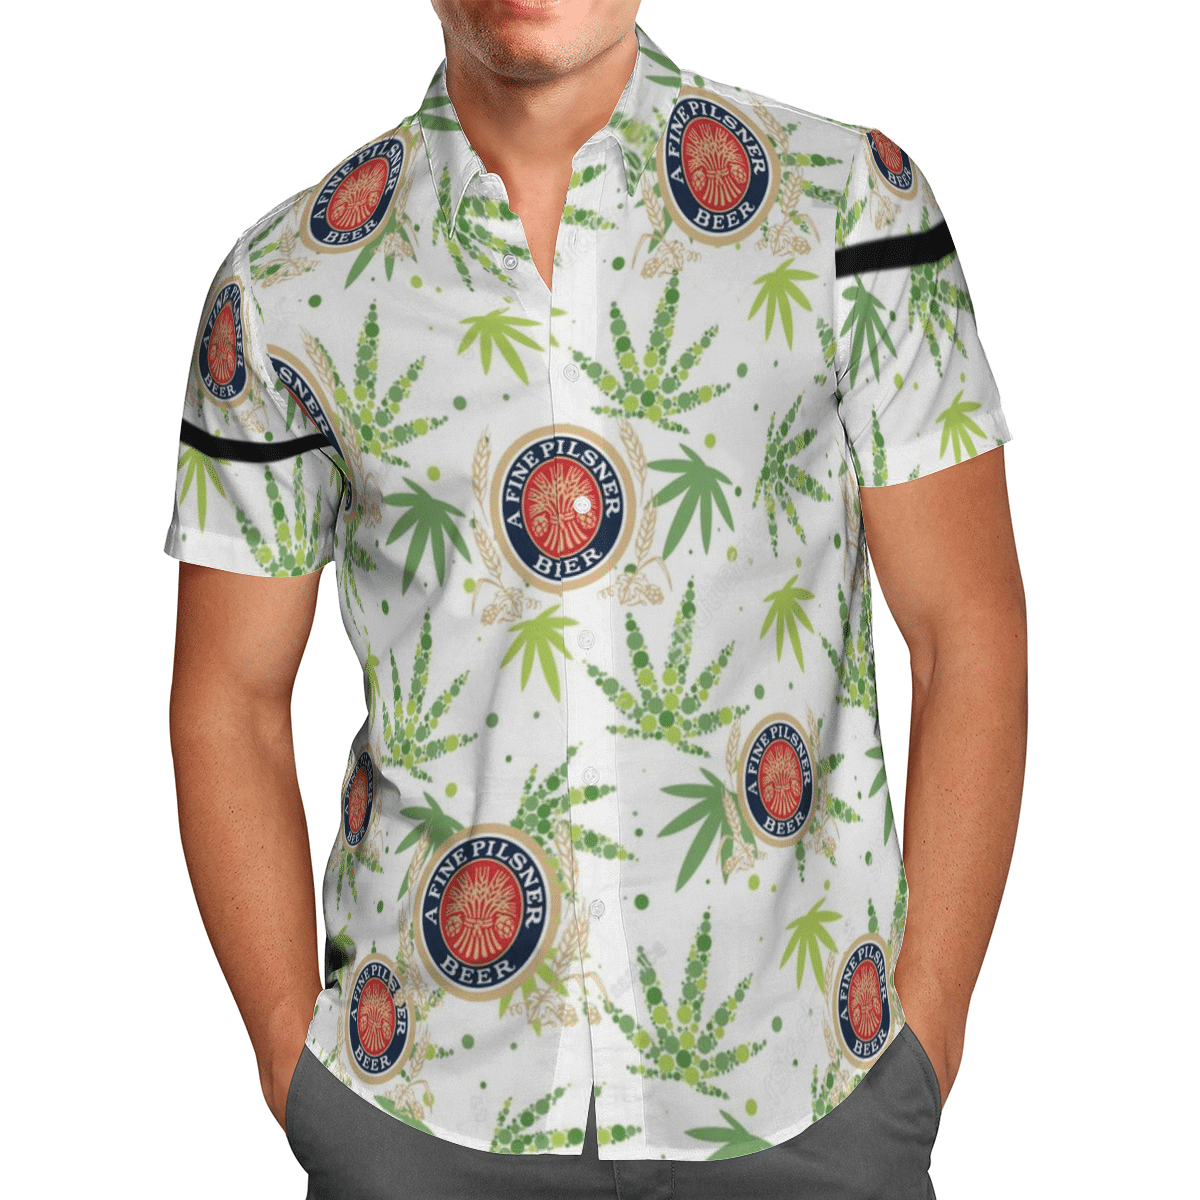 Lite Beer Hawaiian Beach Shirt And Shorts